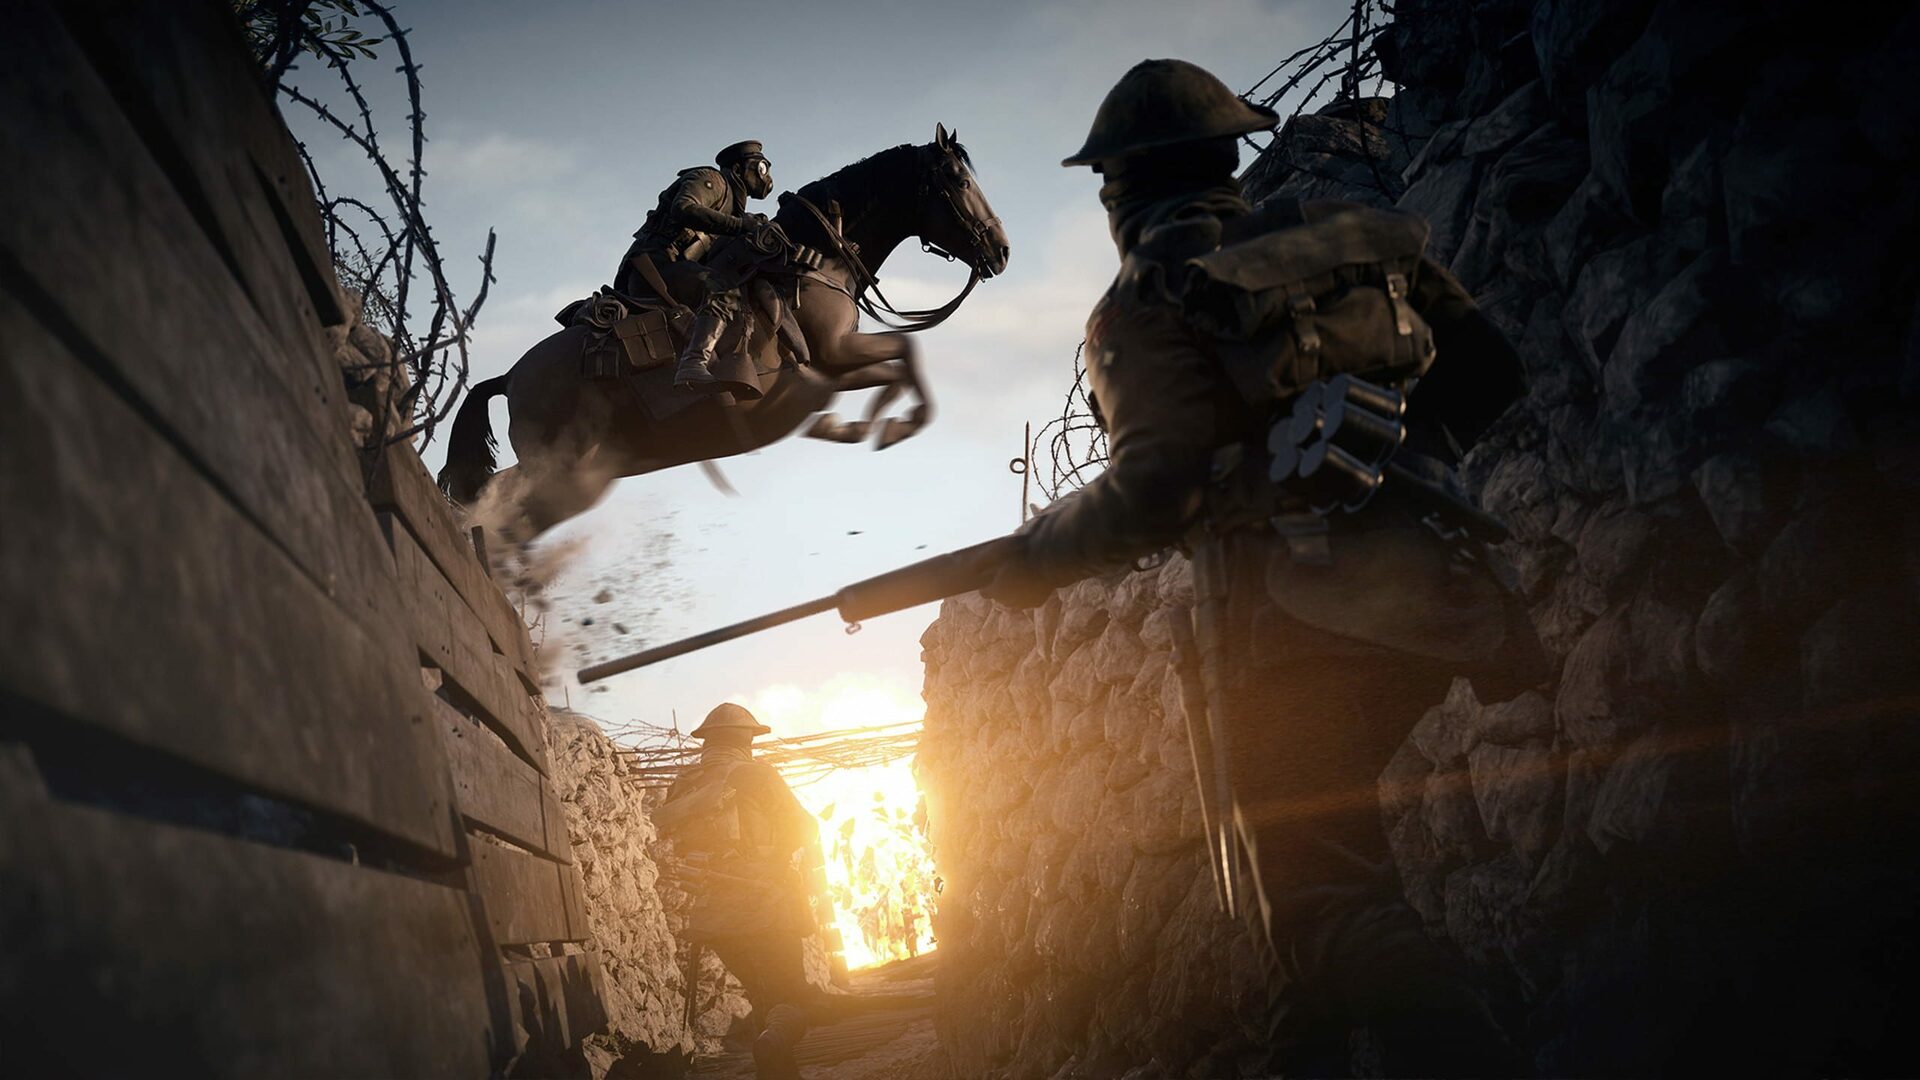 Buy Battlefield 1: Revolution Origin key for Cheaper!